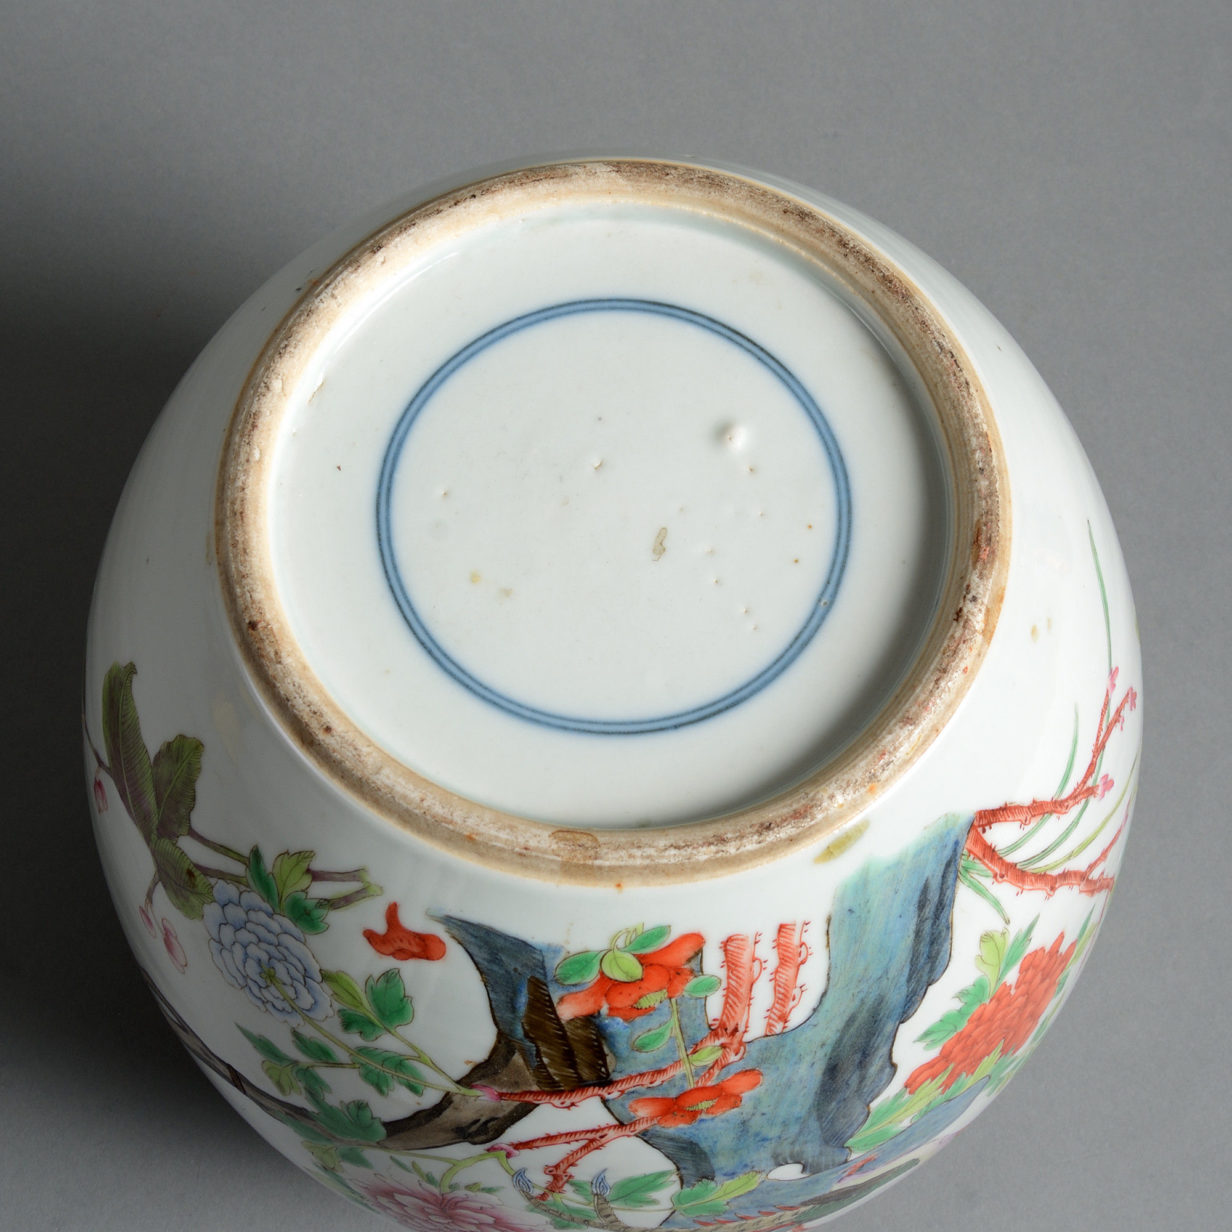 A 19th century famille rose porcelain jar